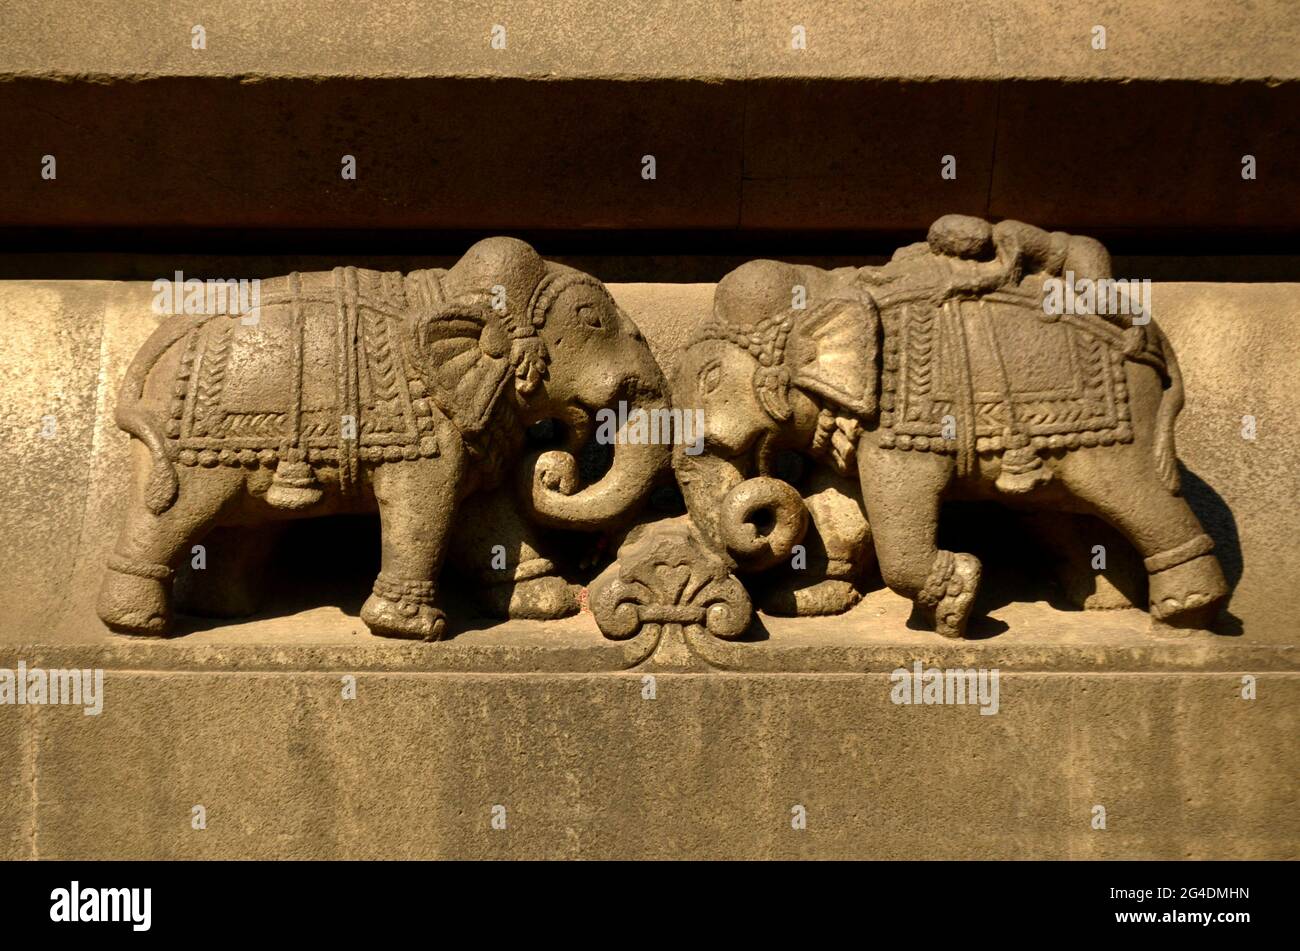 NASHIK, INDIA - Dic 18, sculture in pietra nel tempio di Kalaram (tempio indù) a Nashik in India, è famoso templi indù a Nashik Foto Stock